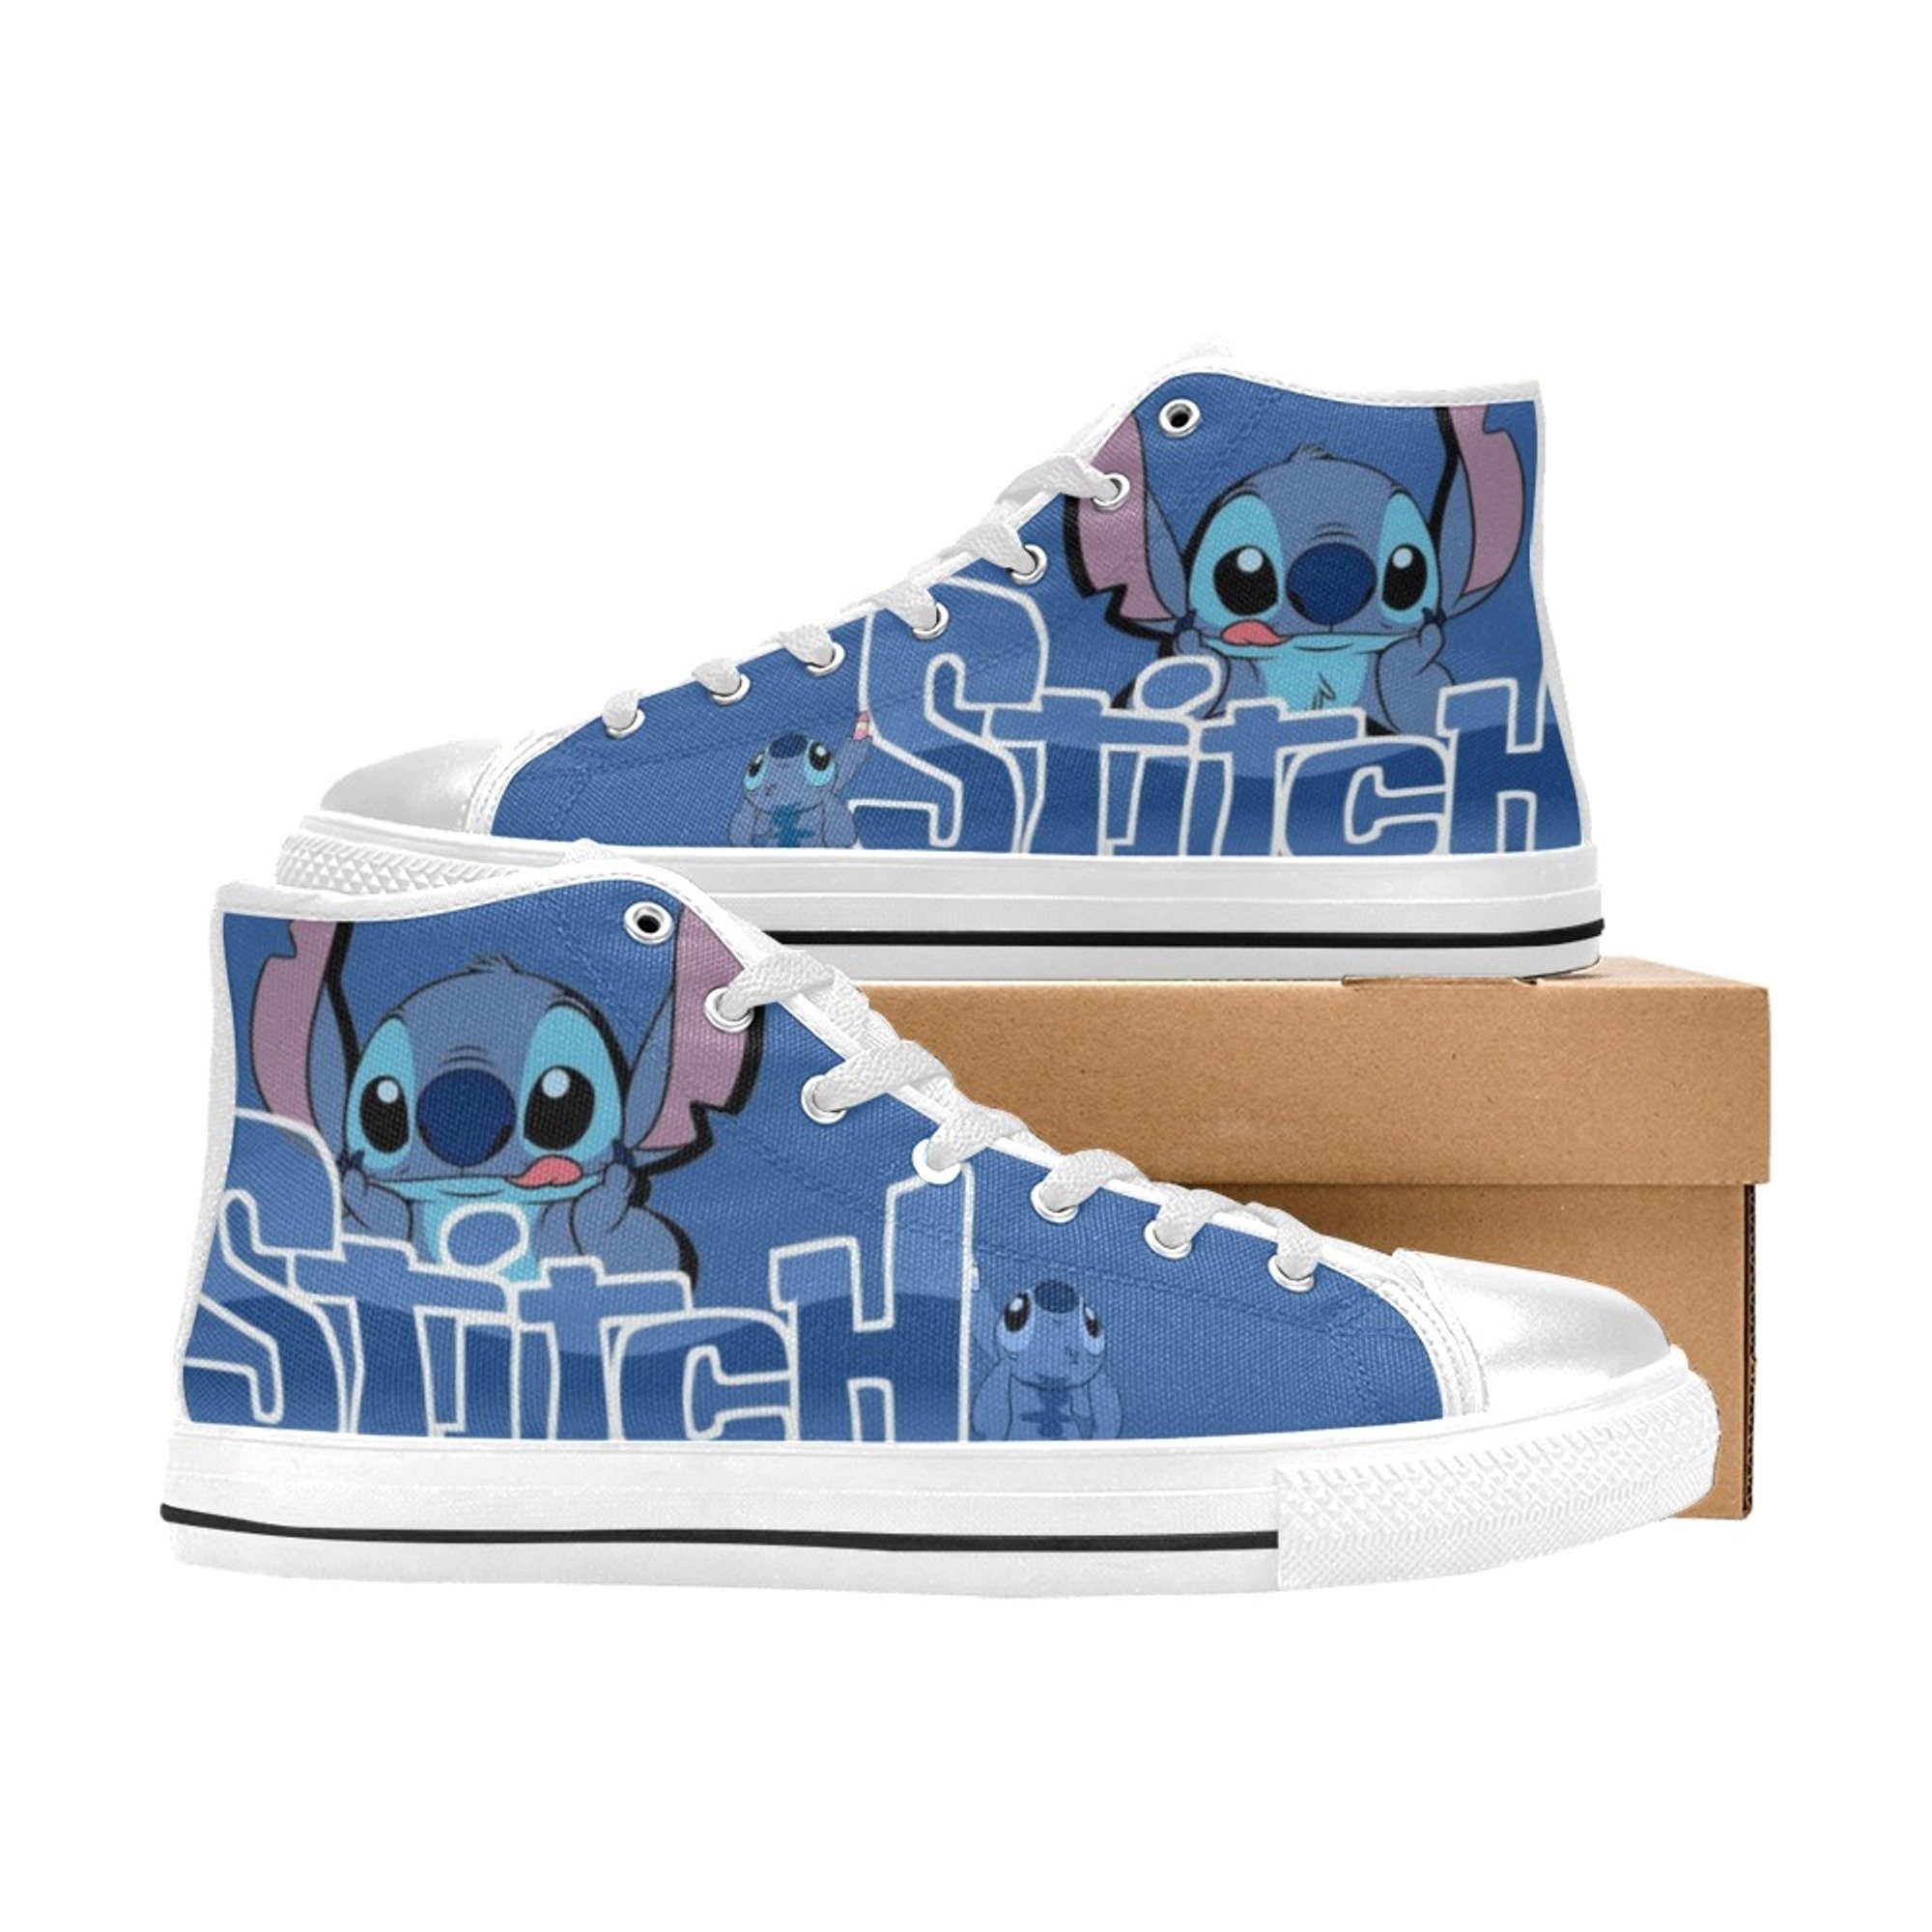 Stitch Custom High Top Sneakers